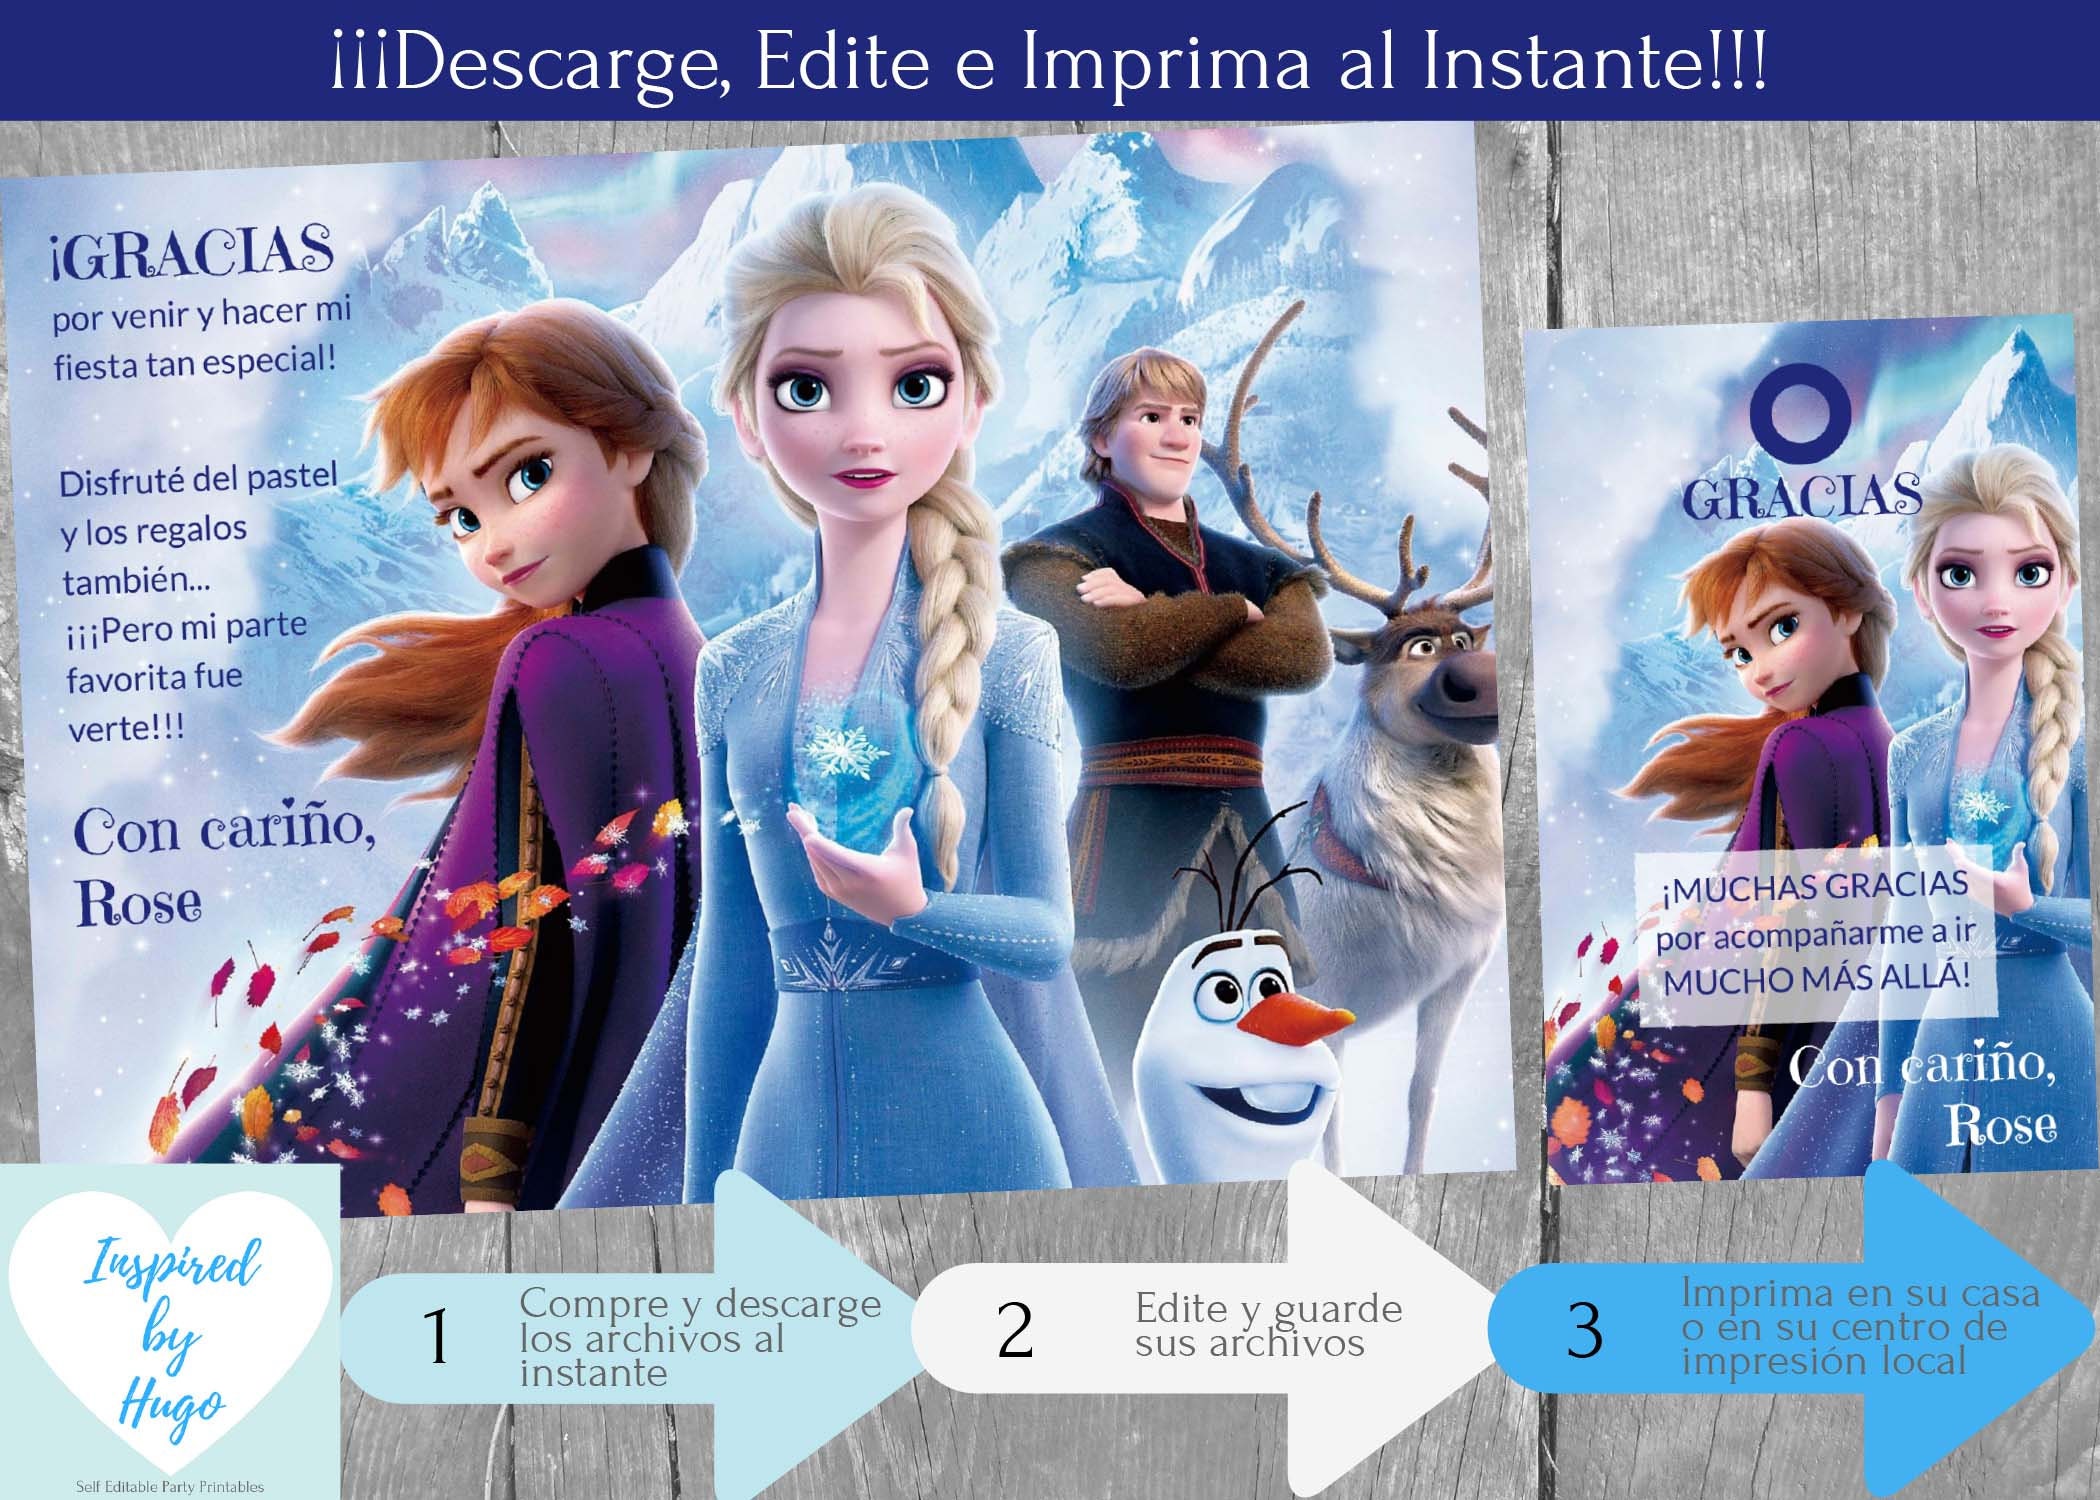 Coloring Book Frozen Bowling Set with Frozen Stickers Disney Frozen Merchandise Frozen Toys Games Activities Bundle Disney Frozen Playset and More 